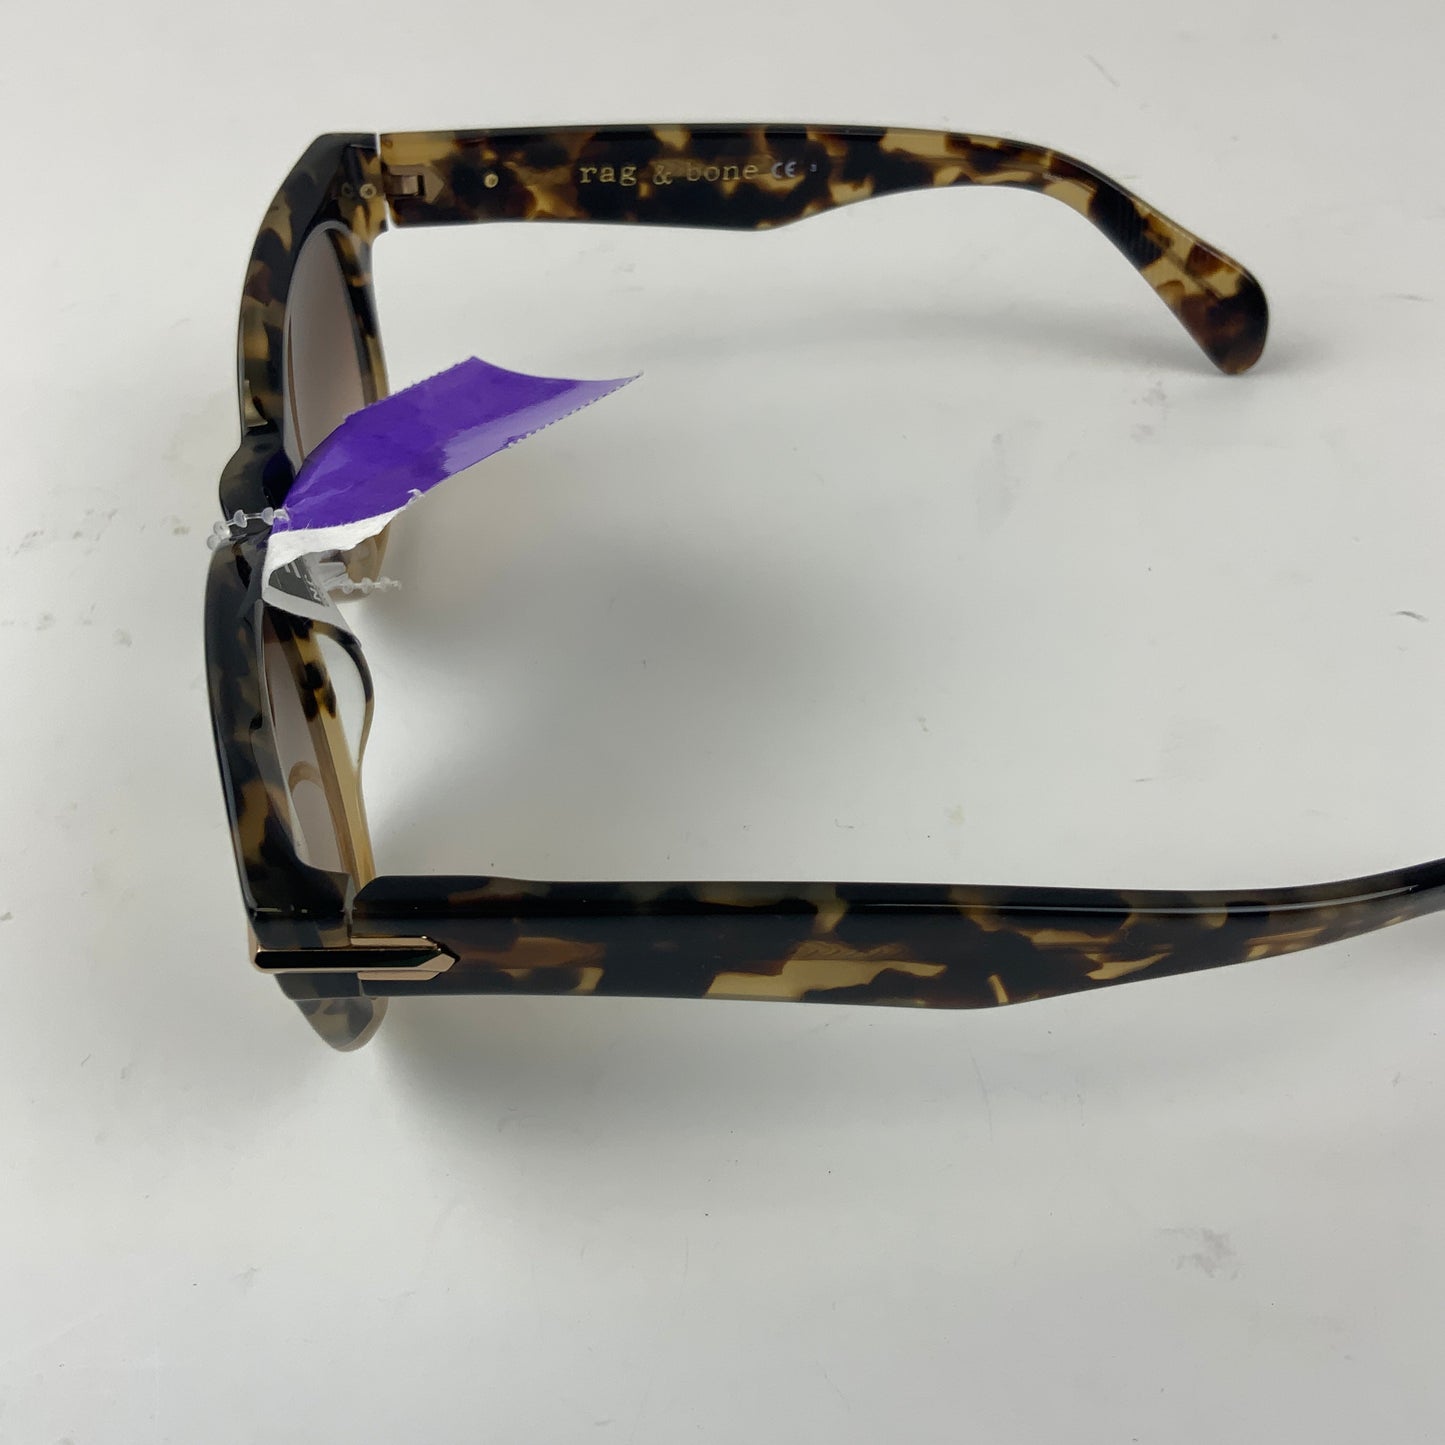 Tortoise Shell Print Sunglasses Designer Rag And Bone